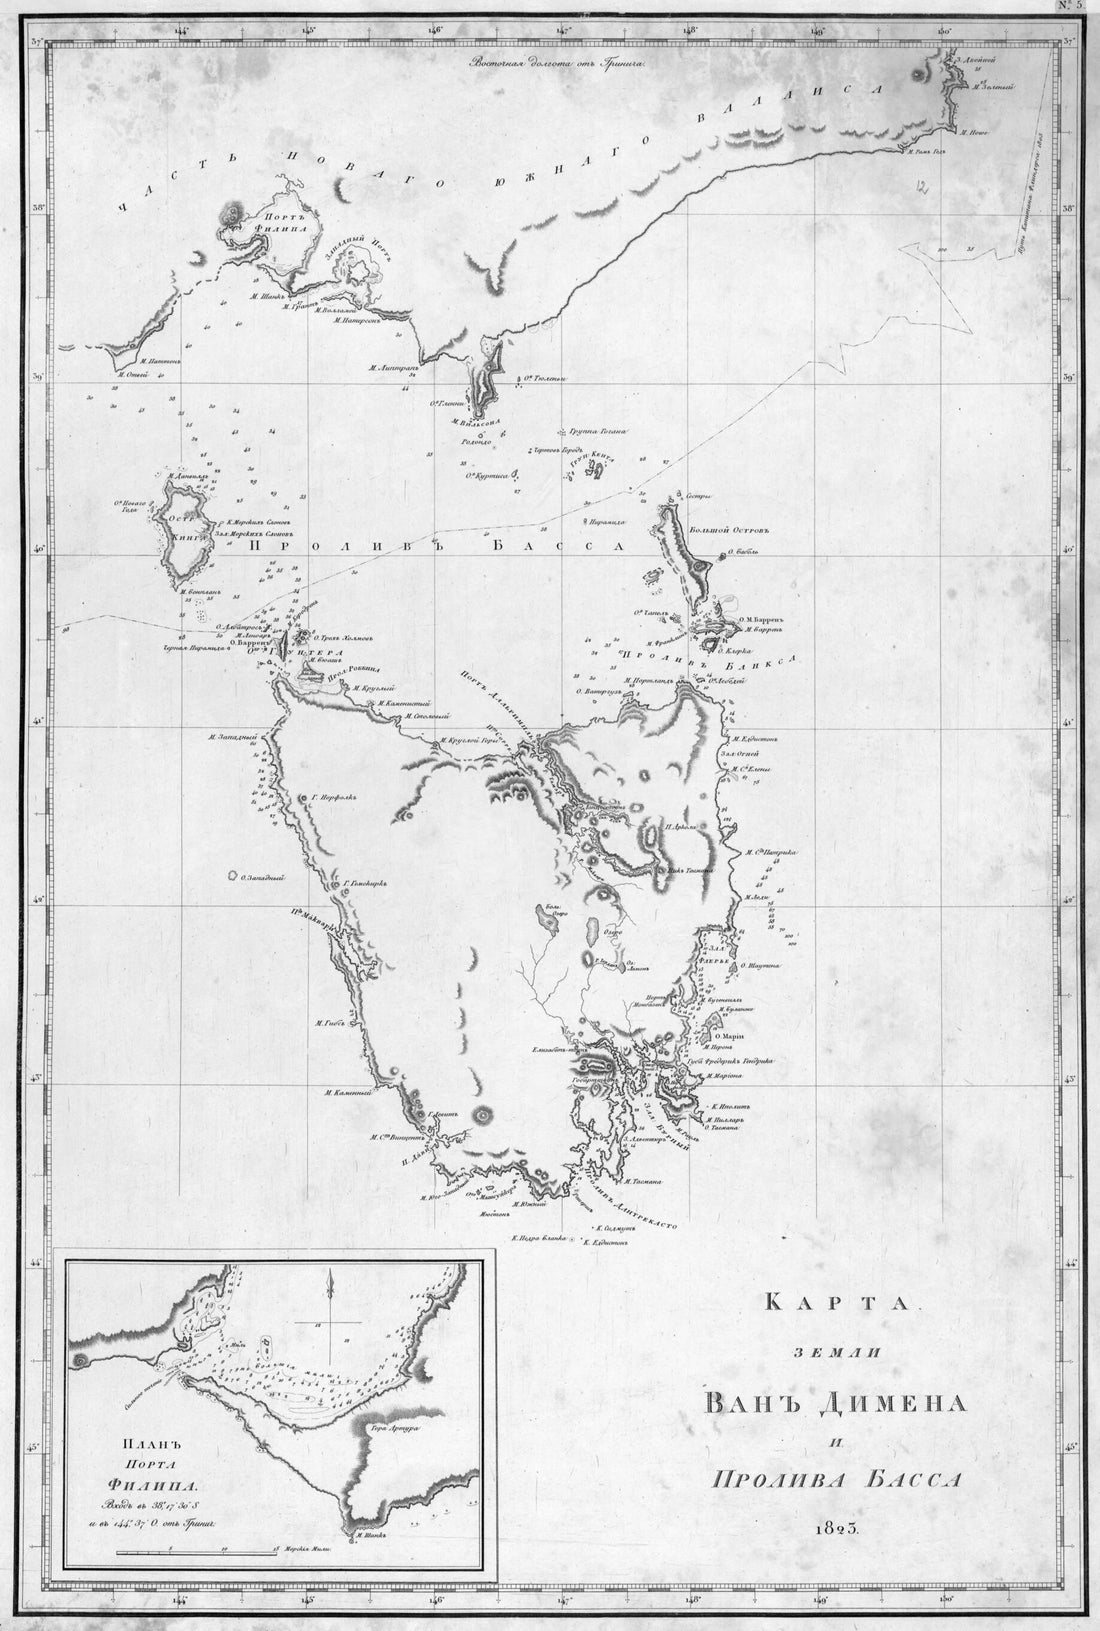 This old map of Karta Zemli Van Dimena I Proliva Bassa. 1823. (Карта земли Ван Димена и Пролива Басса. 1823.) from 1824 was created by Ivan Fedorovich Kruzenshtern in 1824